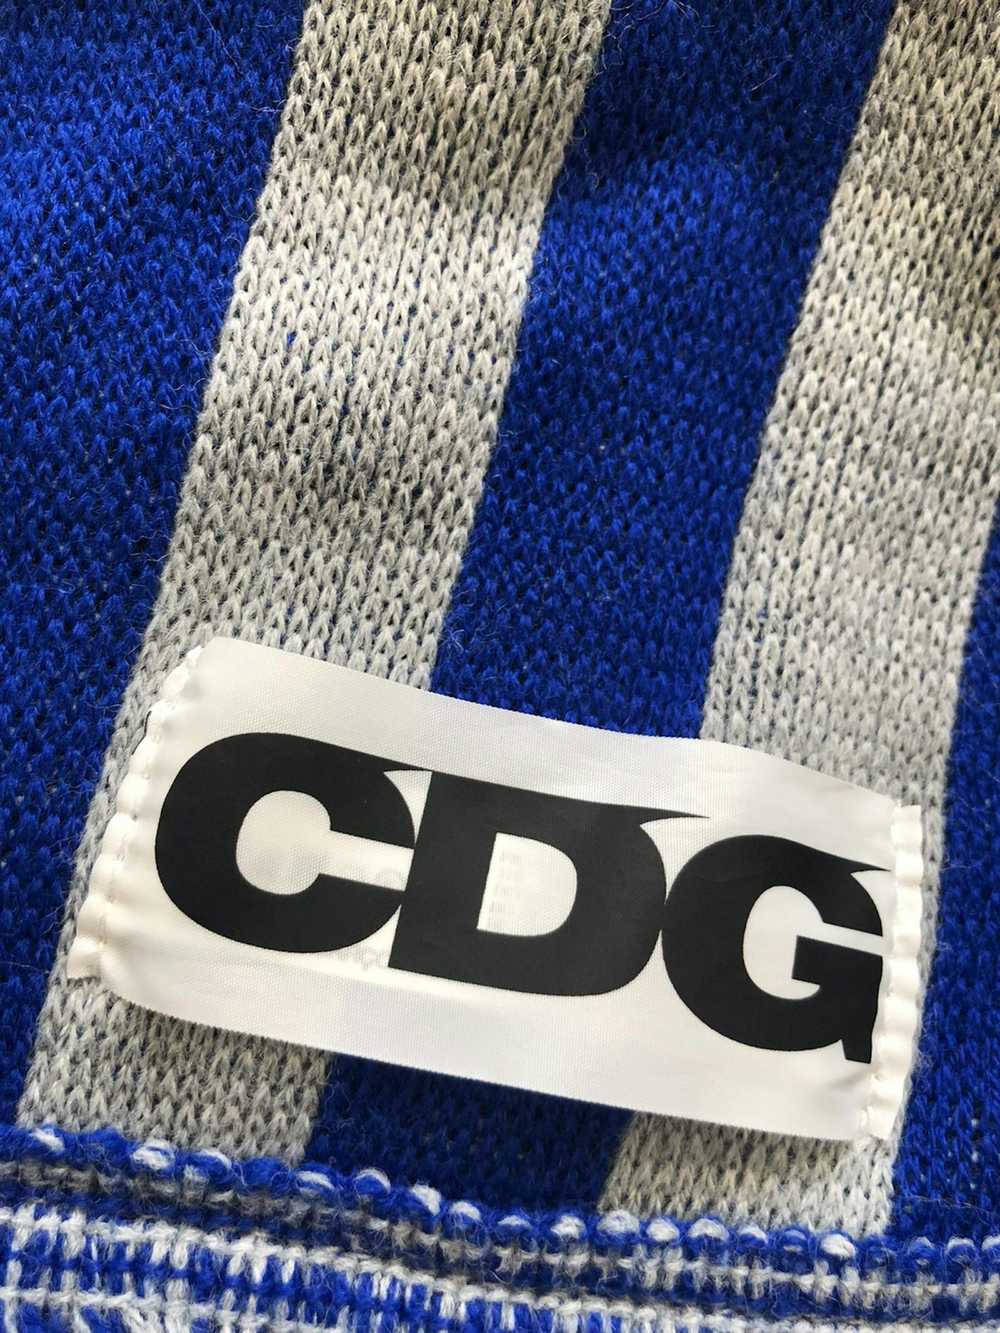 Comme des Garcons CDG x DSM blue&white scarf - image 4